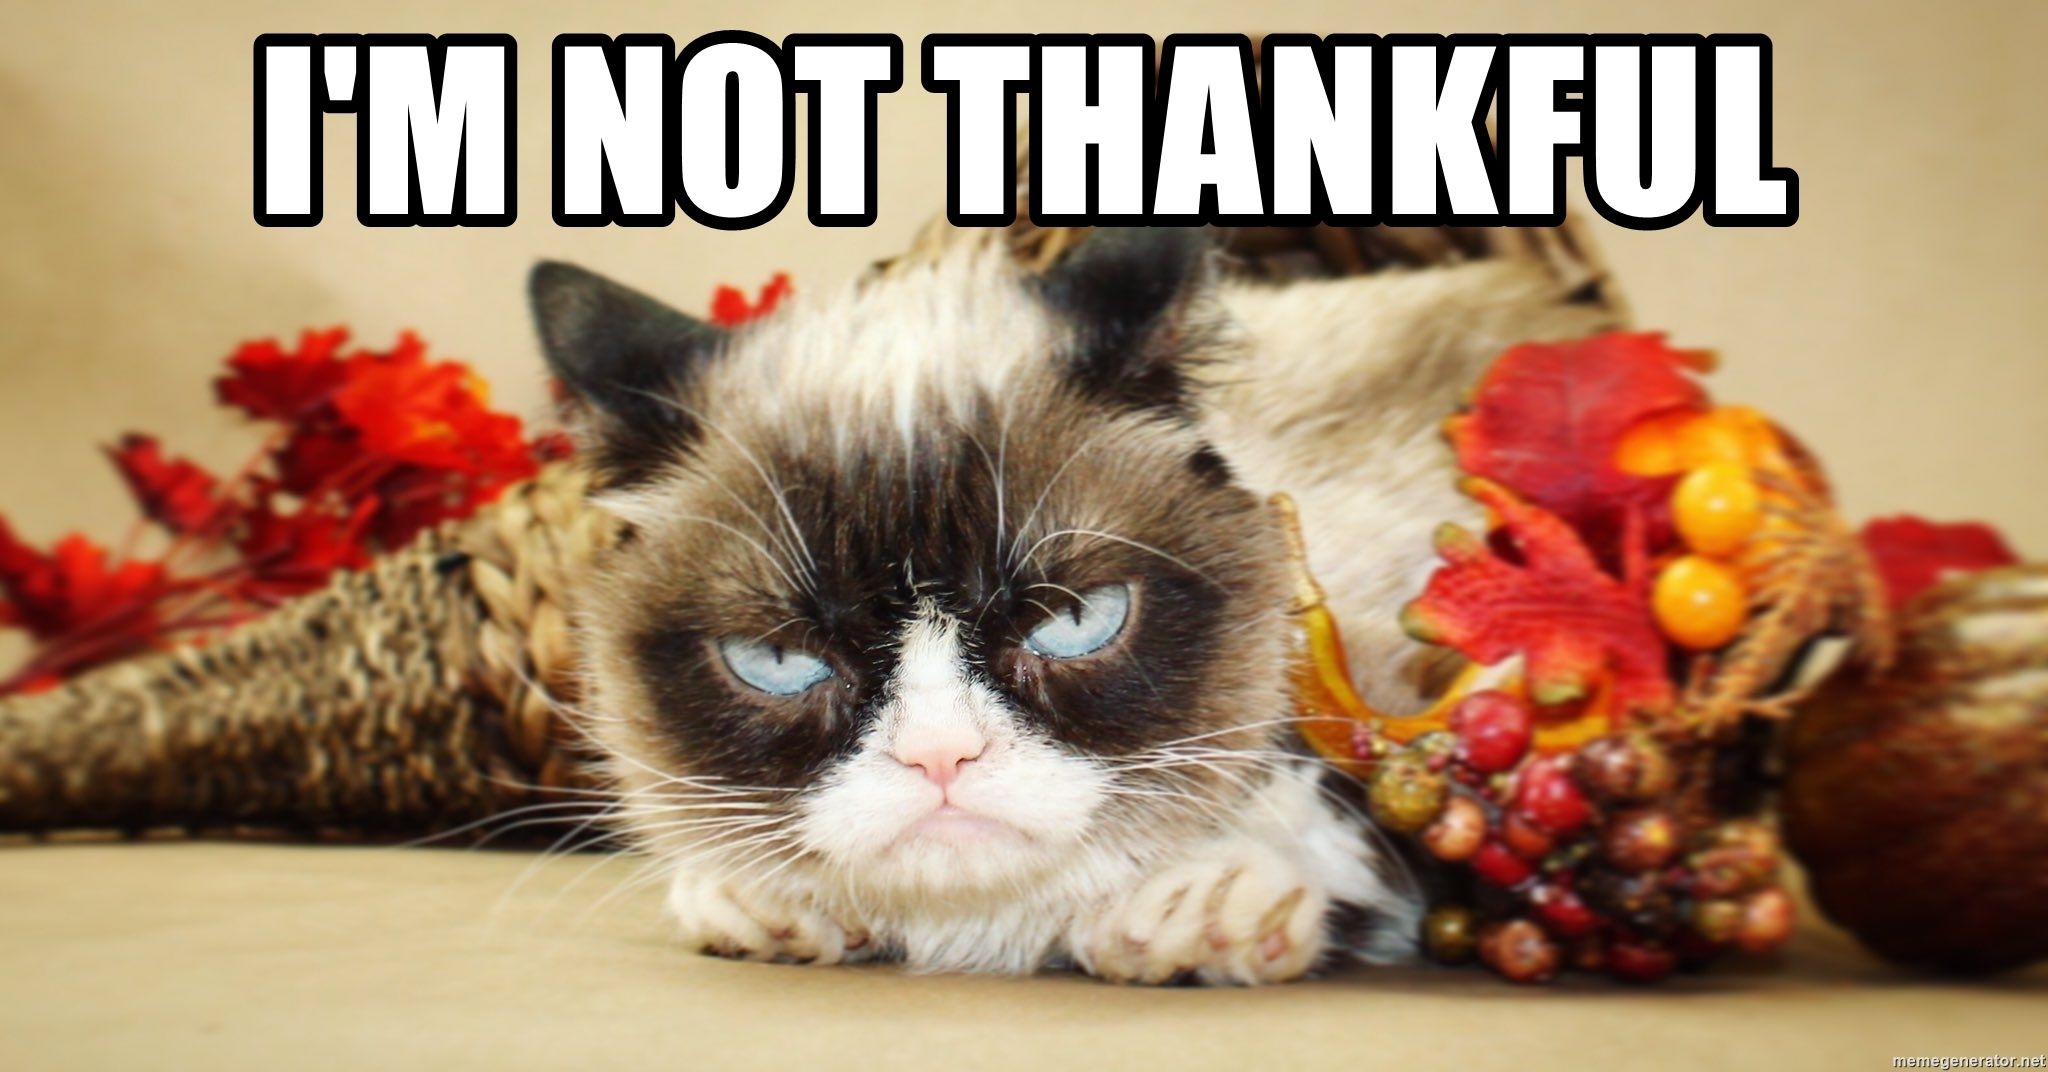 grumpy cat happy thanksgiving